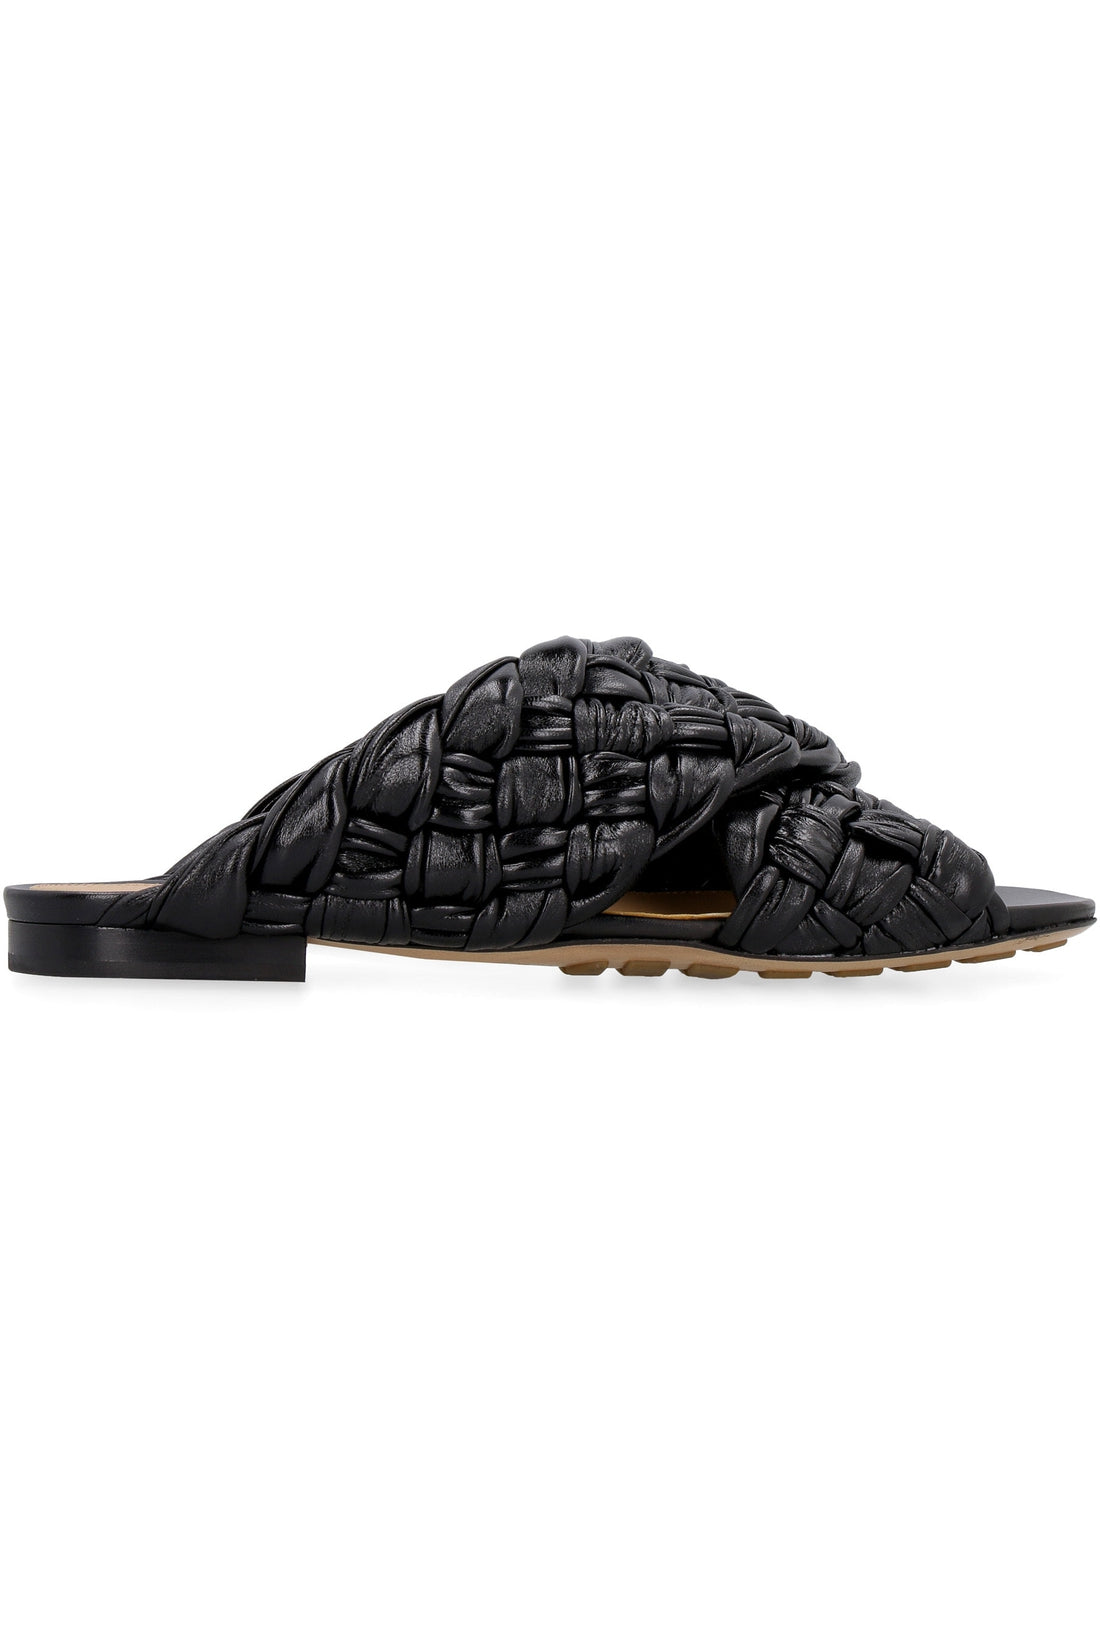 Bottega Veneta-OUTLET-SALE-BV Board leather flat sandals-ARCHIVIST